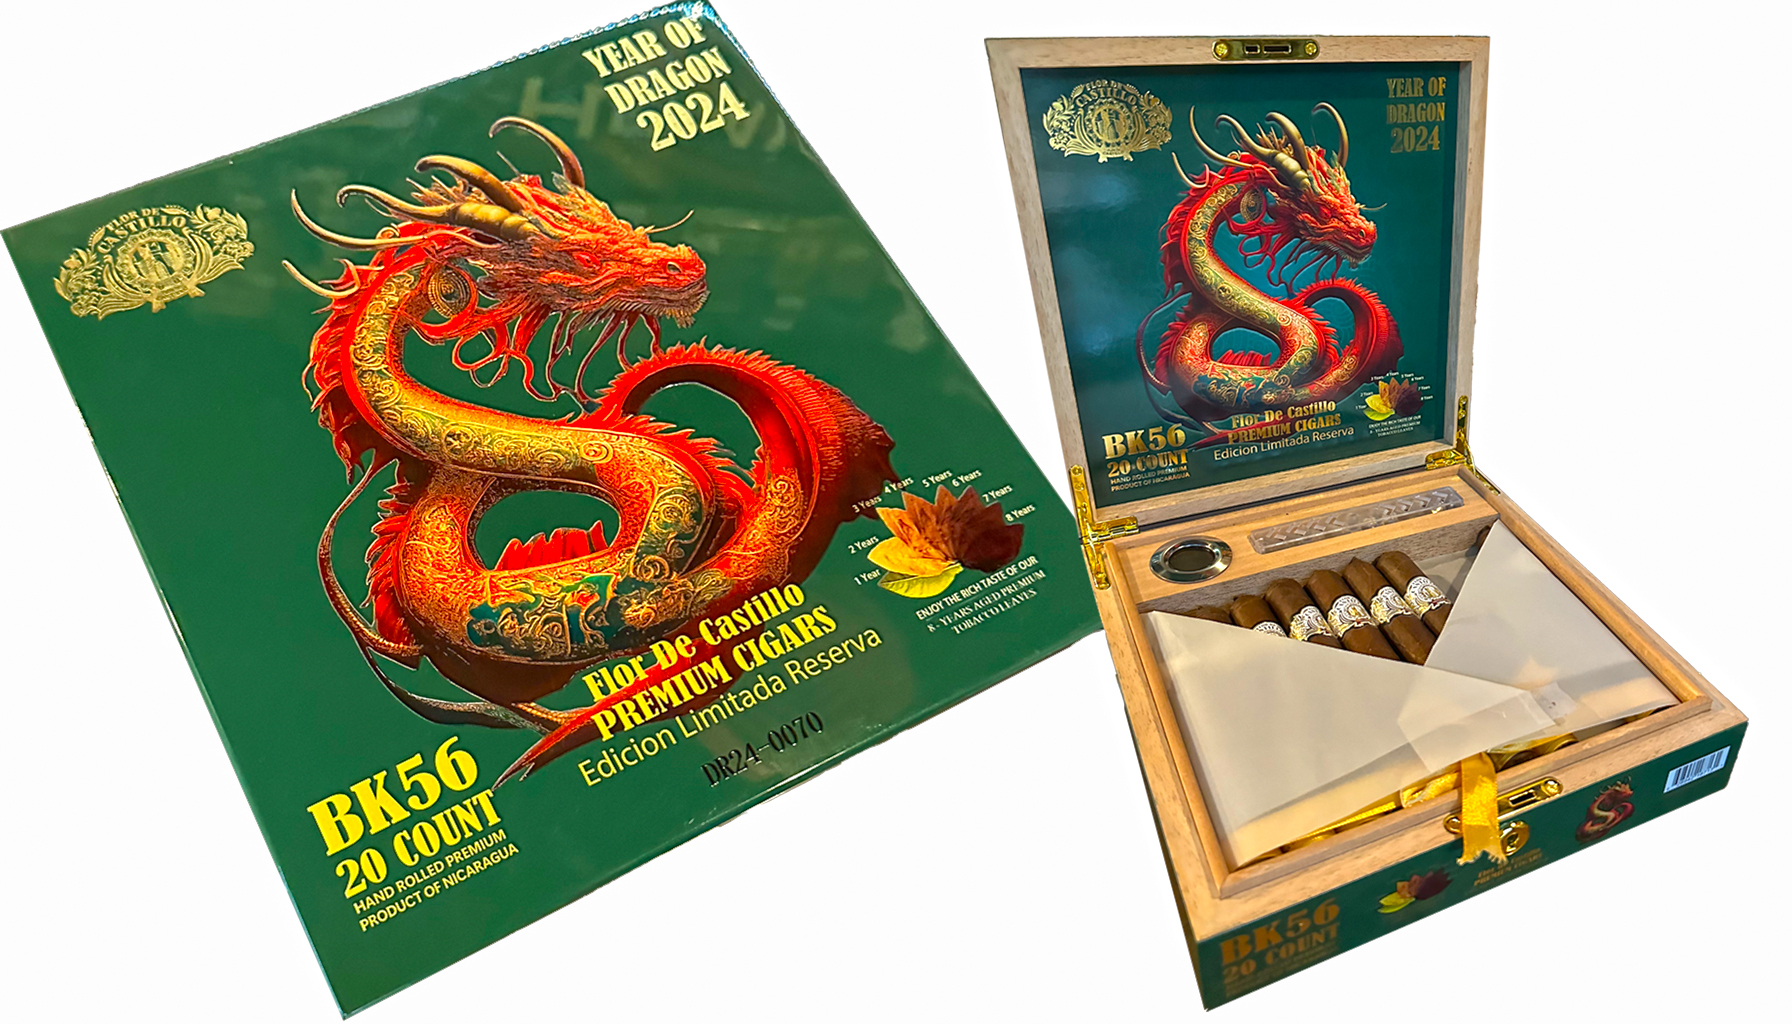 Limited Edition Year of the Dragon 2024: Flor de Castillo